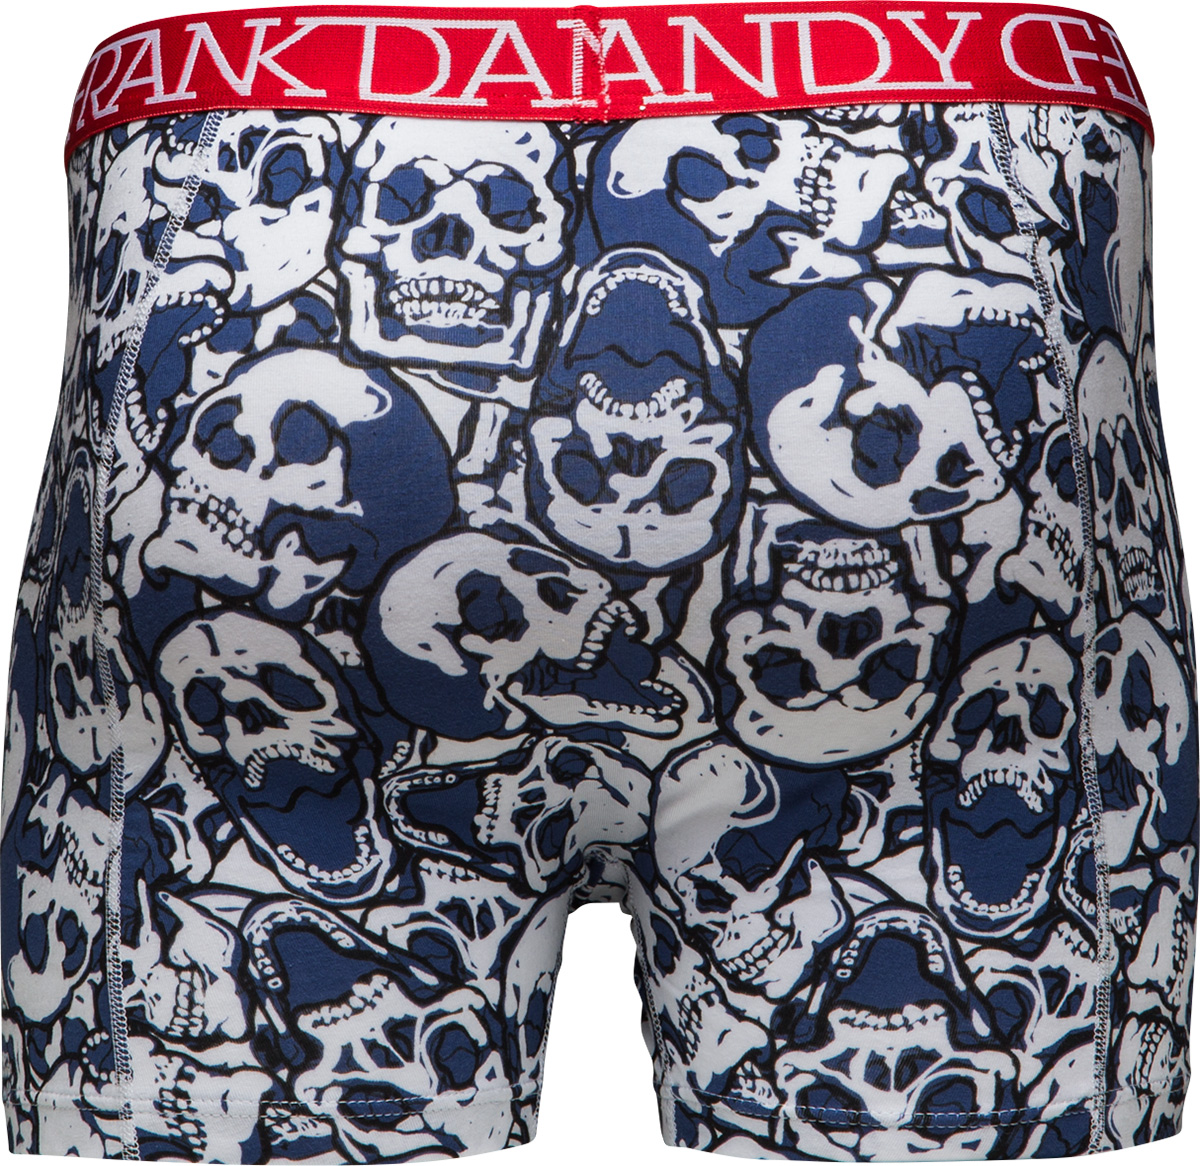 Frank Dandy Assorted Skulls Boxer Dark Navy XL